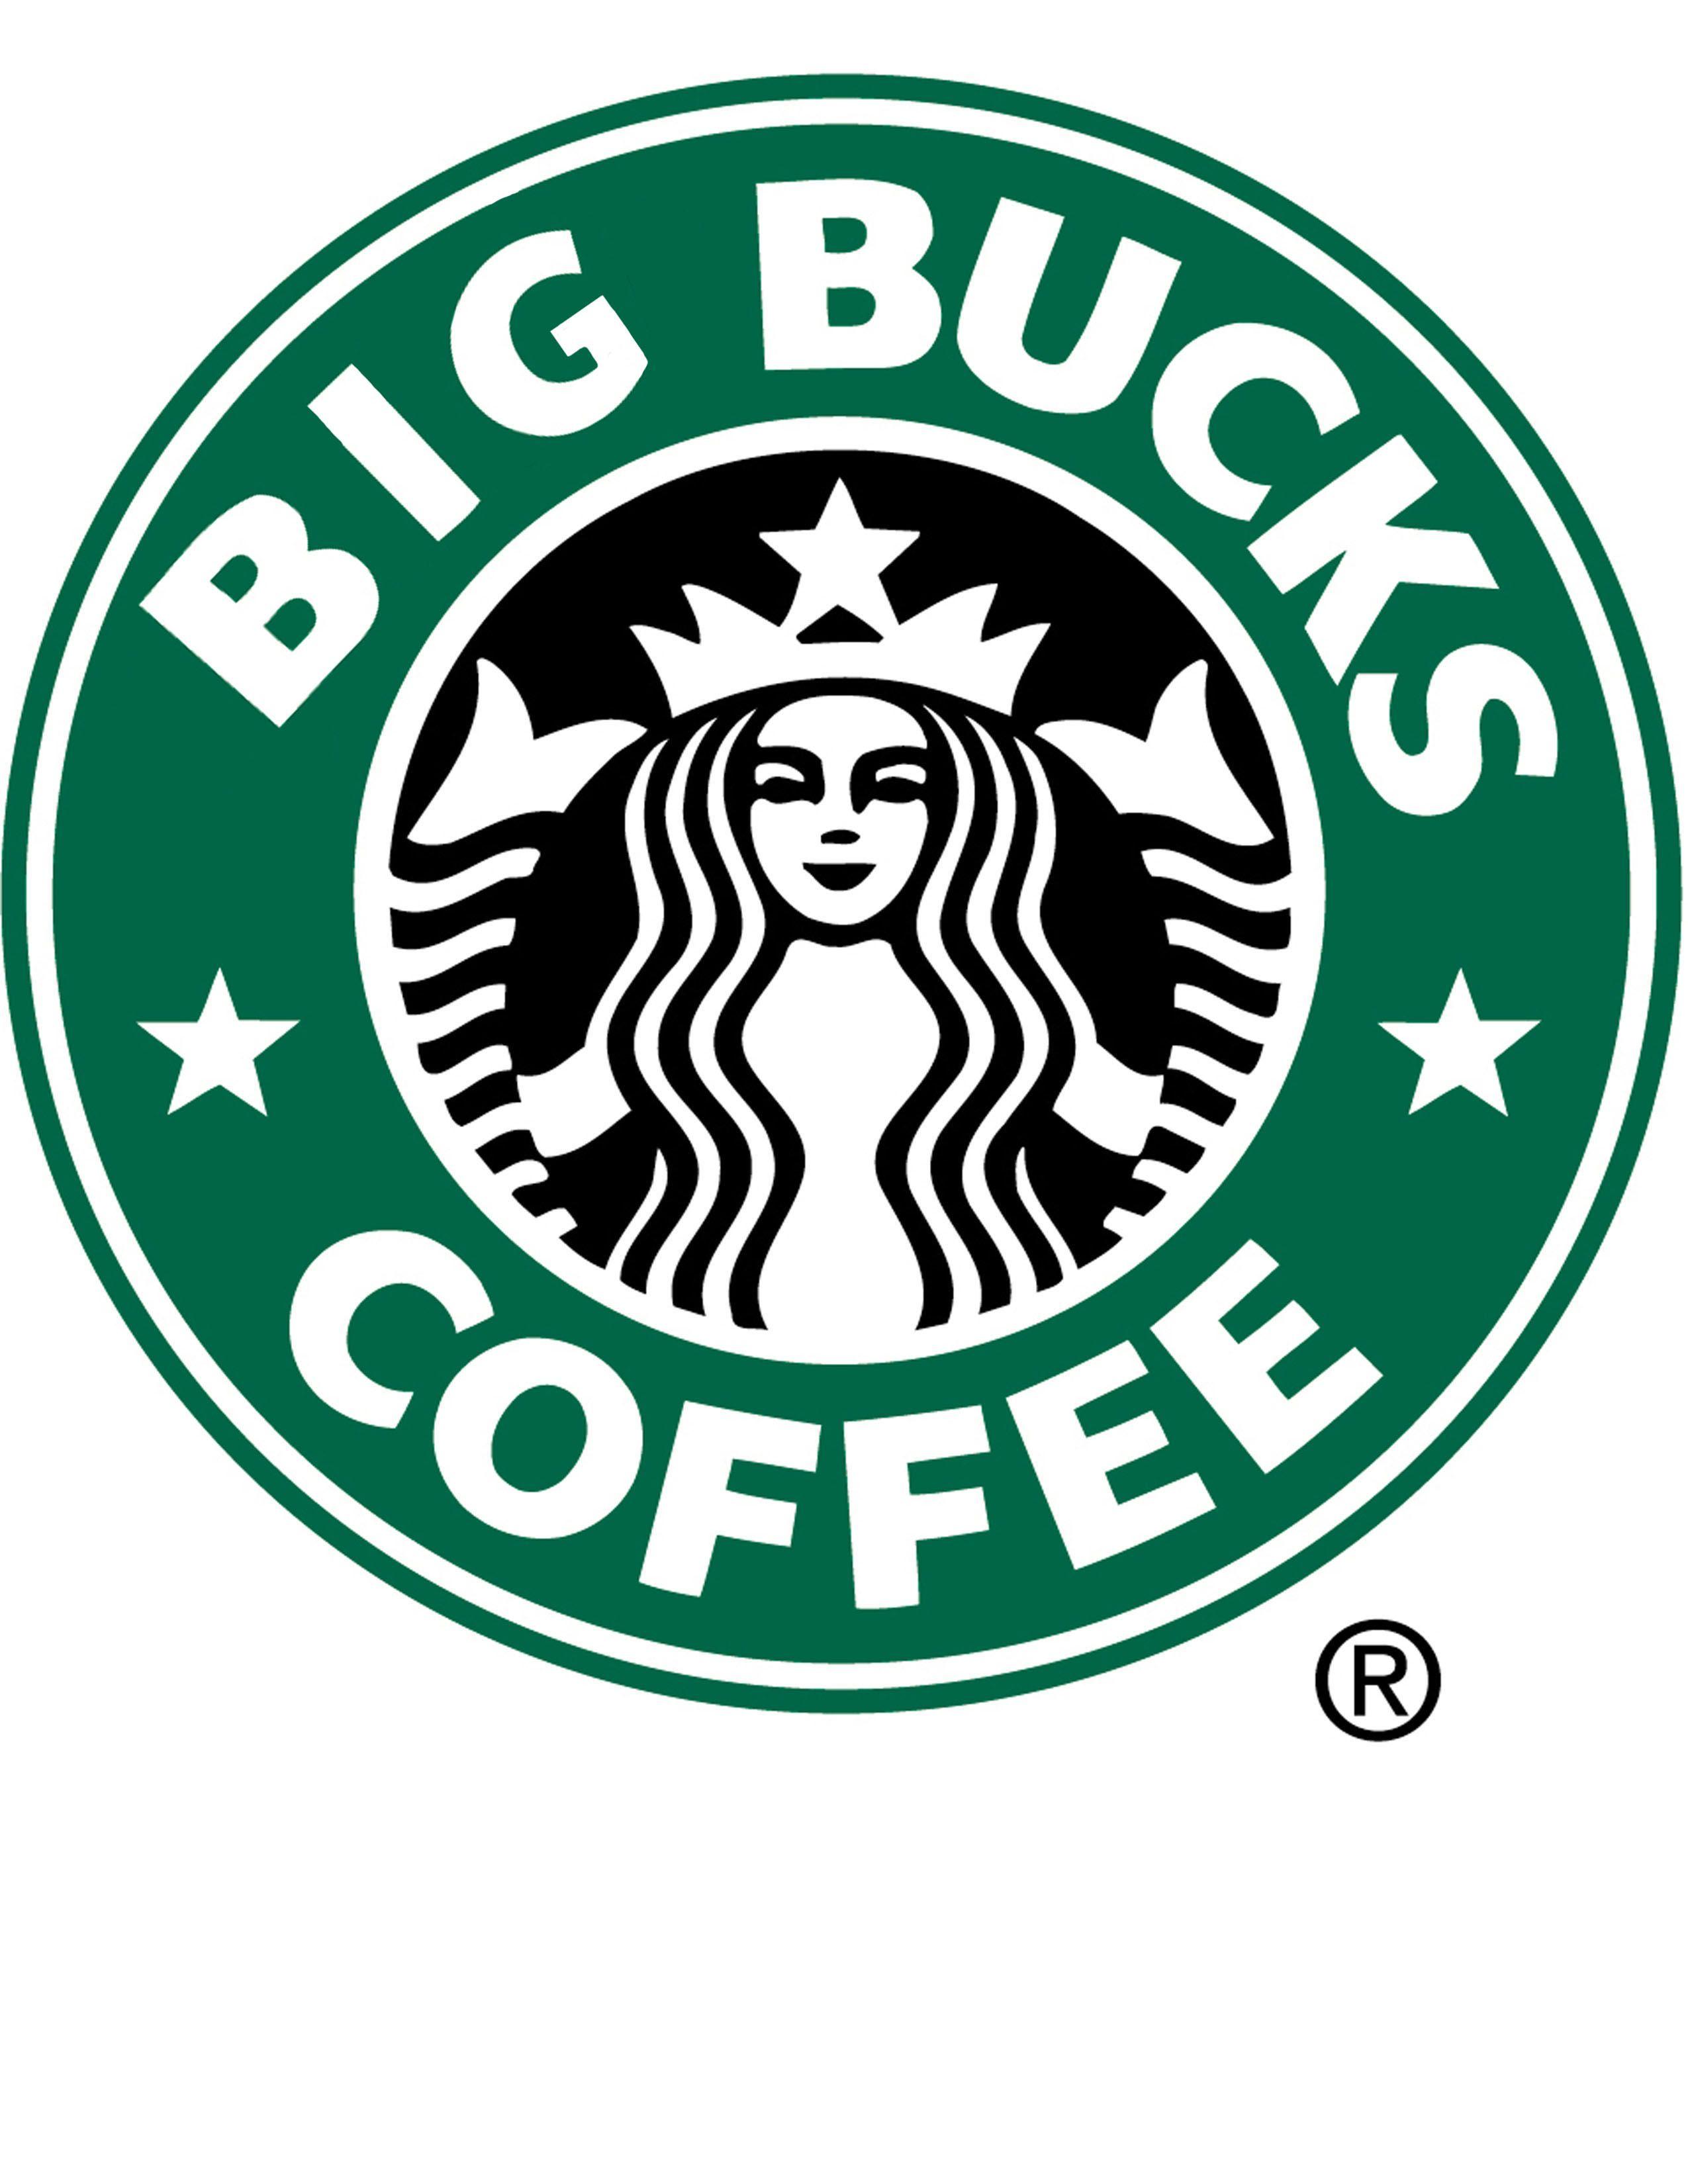 Starbucks Coffee Logo - Starbucks Coffee Company Logo